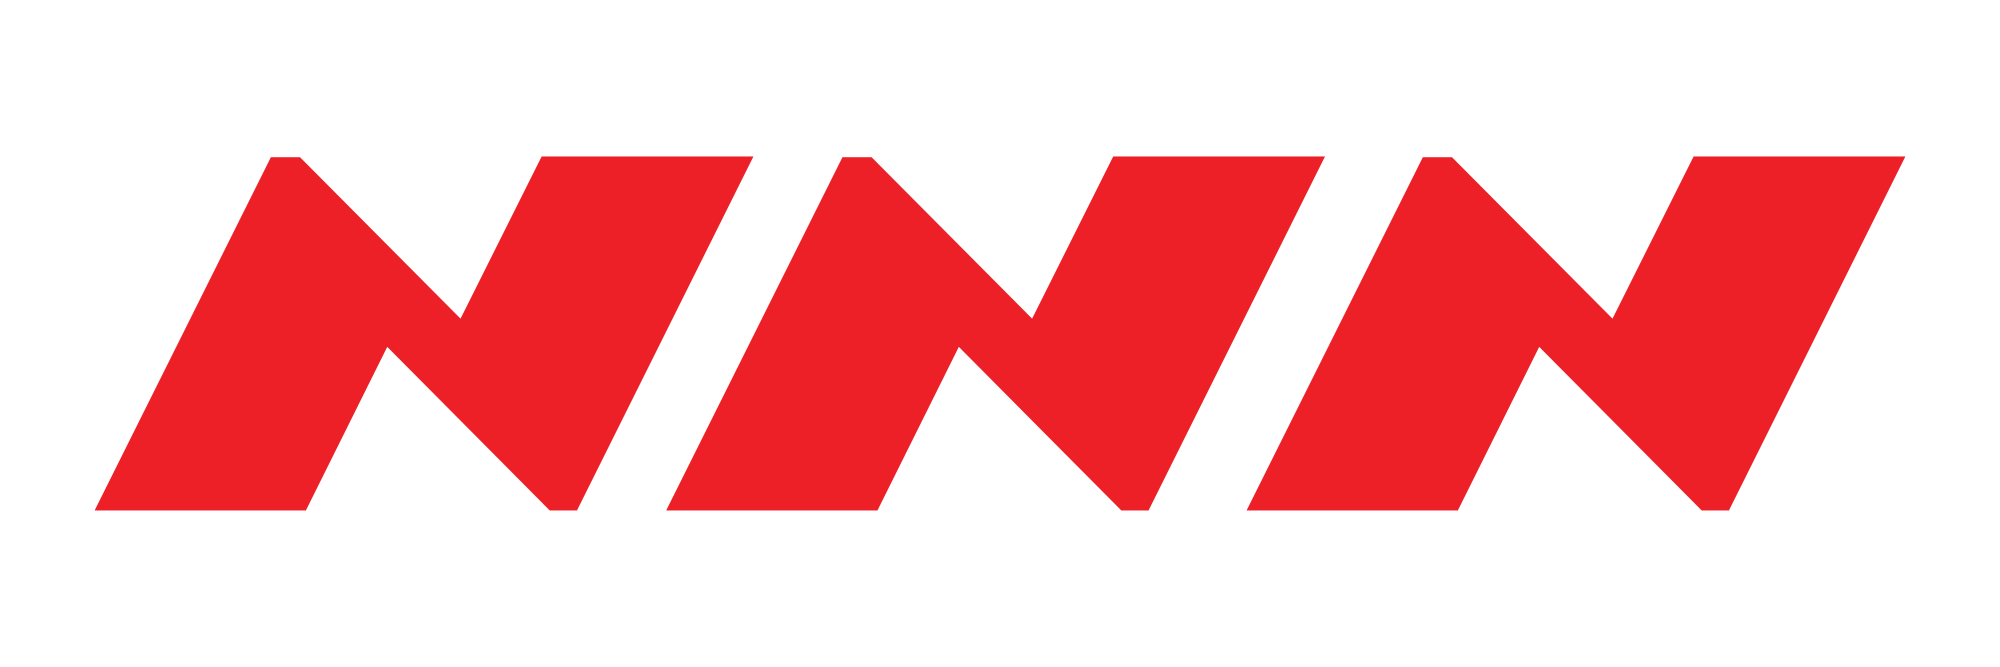 Nnn Logo - File:NNN logo red.svg - Wikimedia Commons